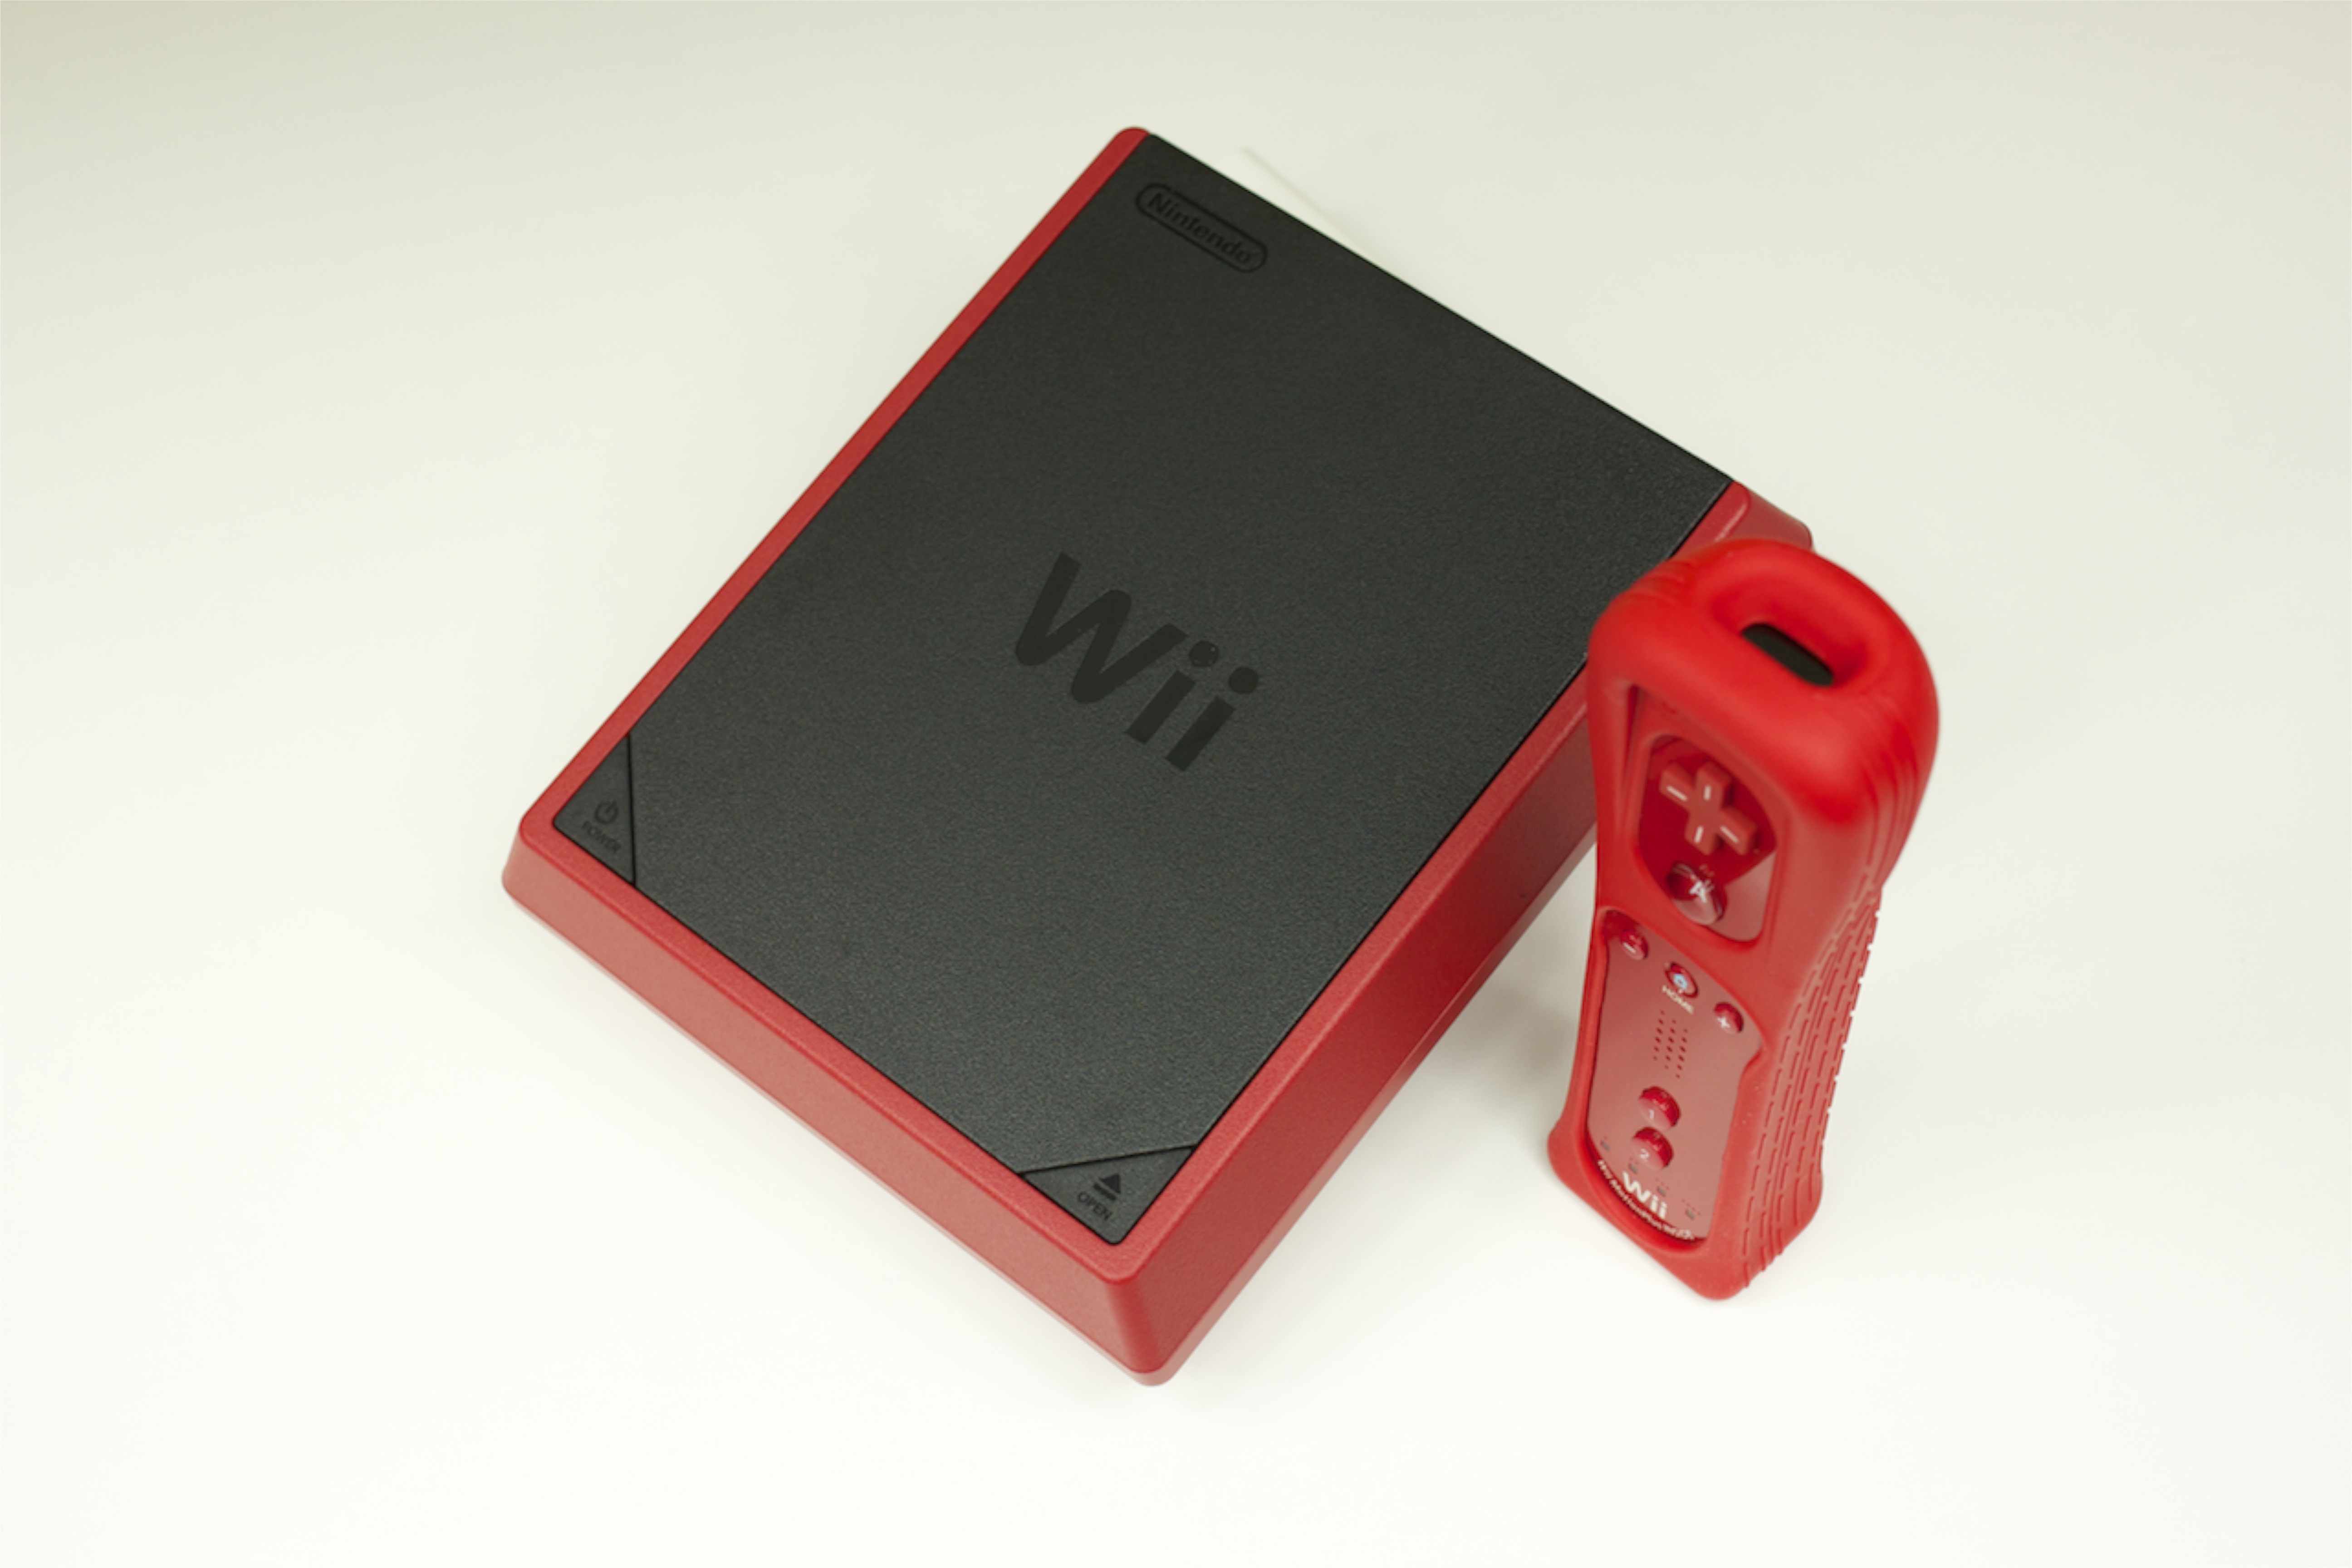 Predstavujeme: Wii mini